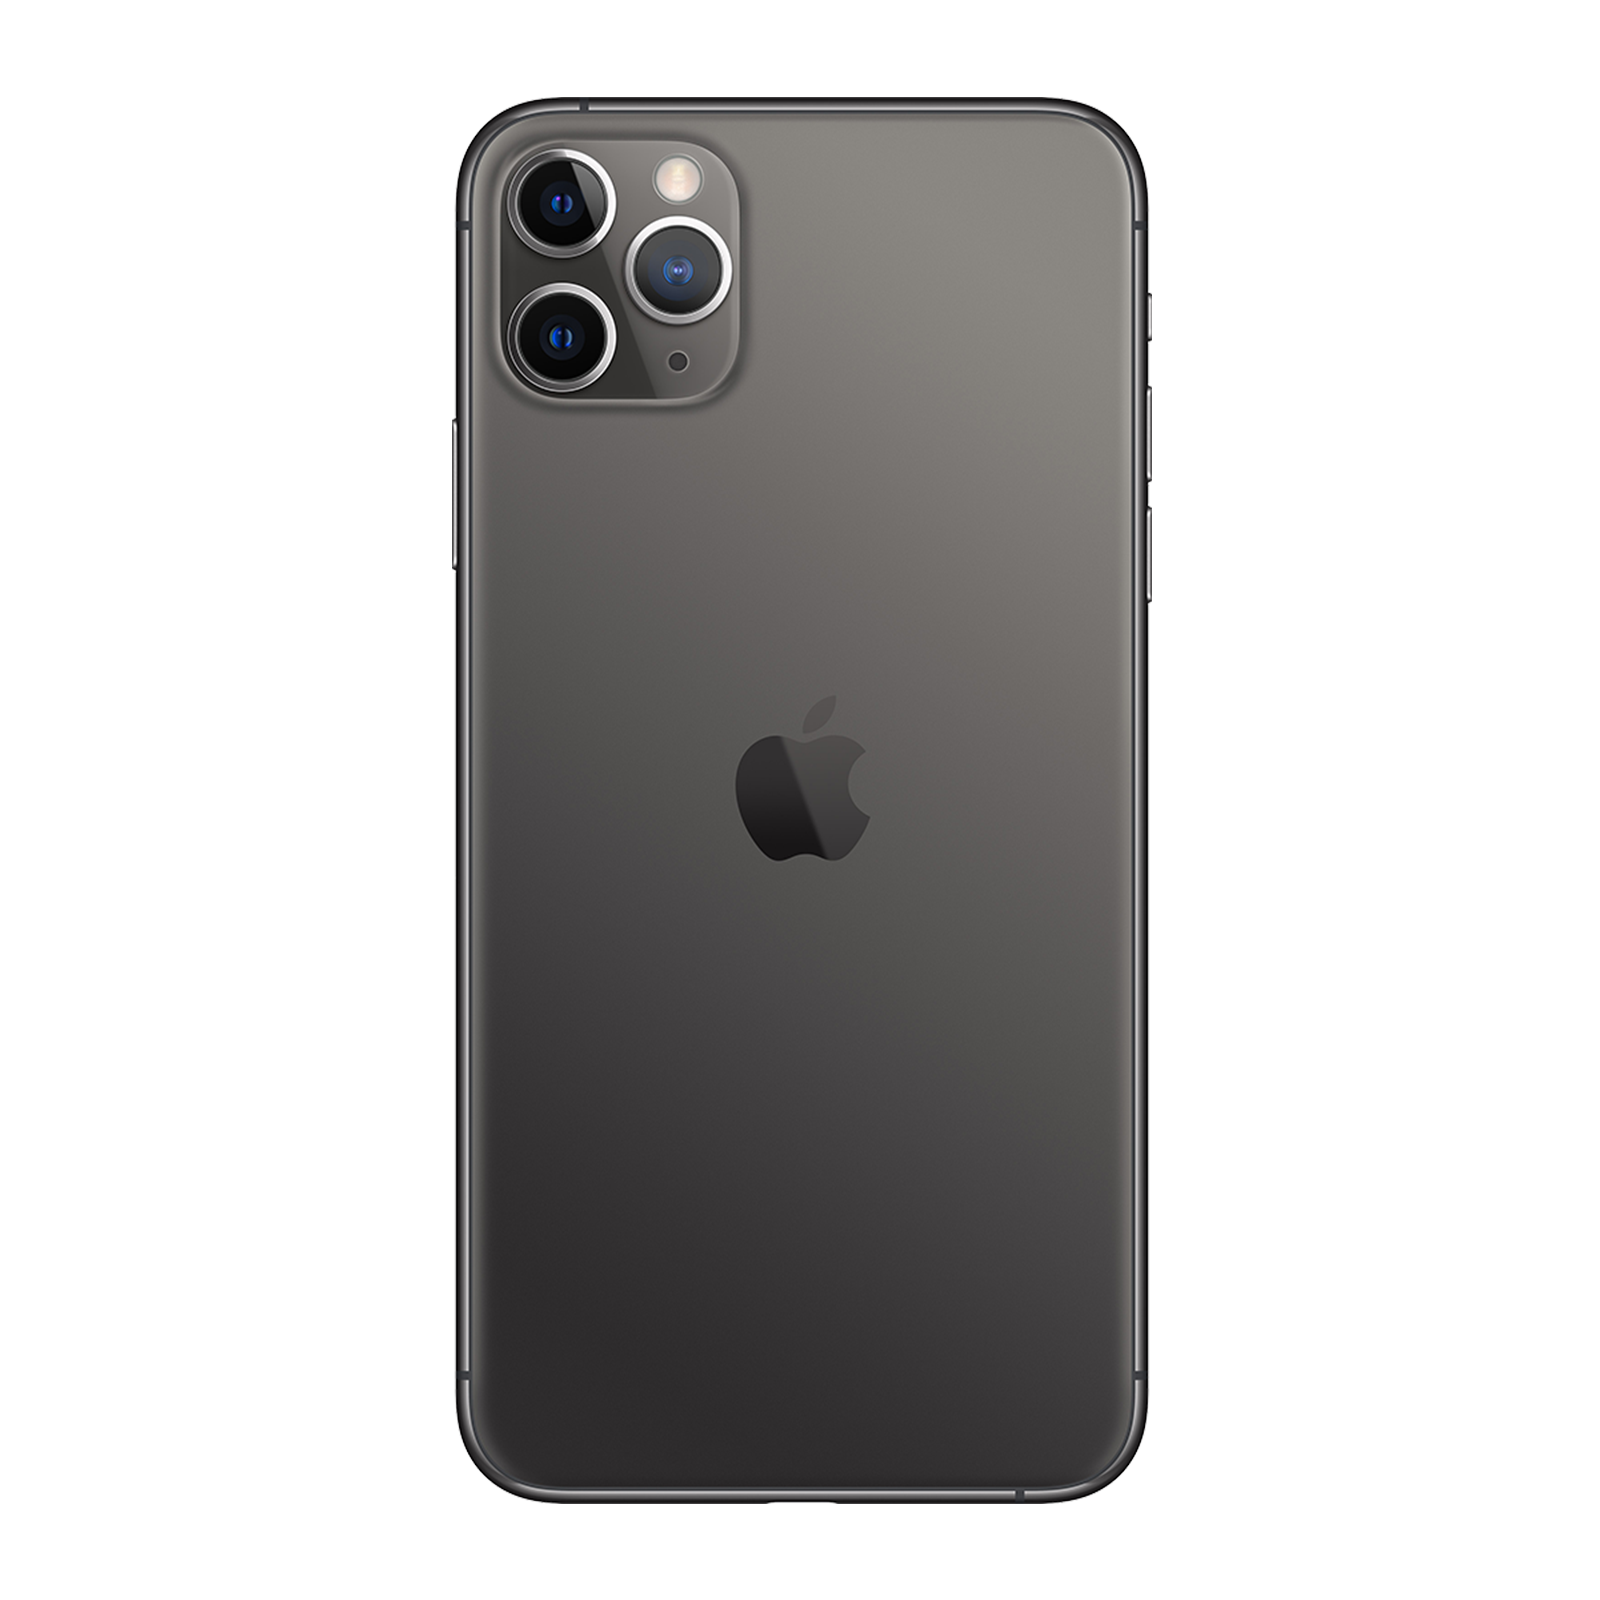 Apple iPhone 11 Pro 256GB Space Grey Pristine - T-Mobile